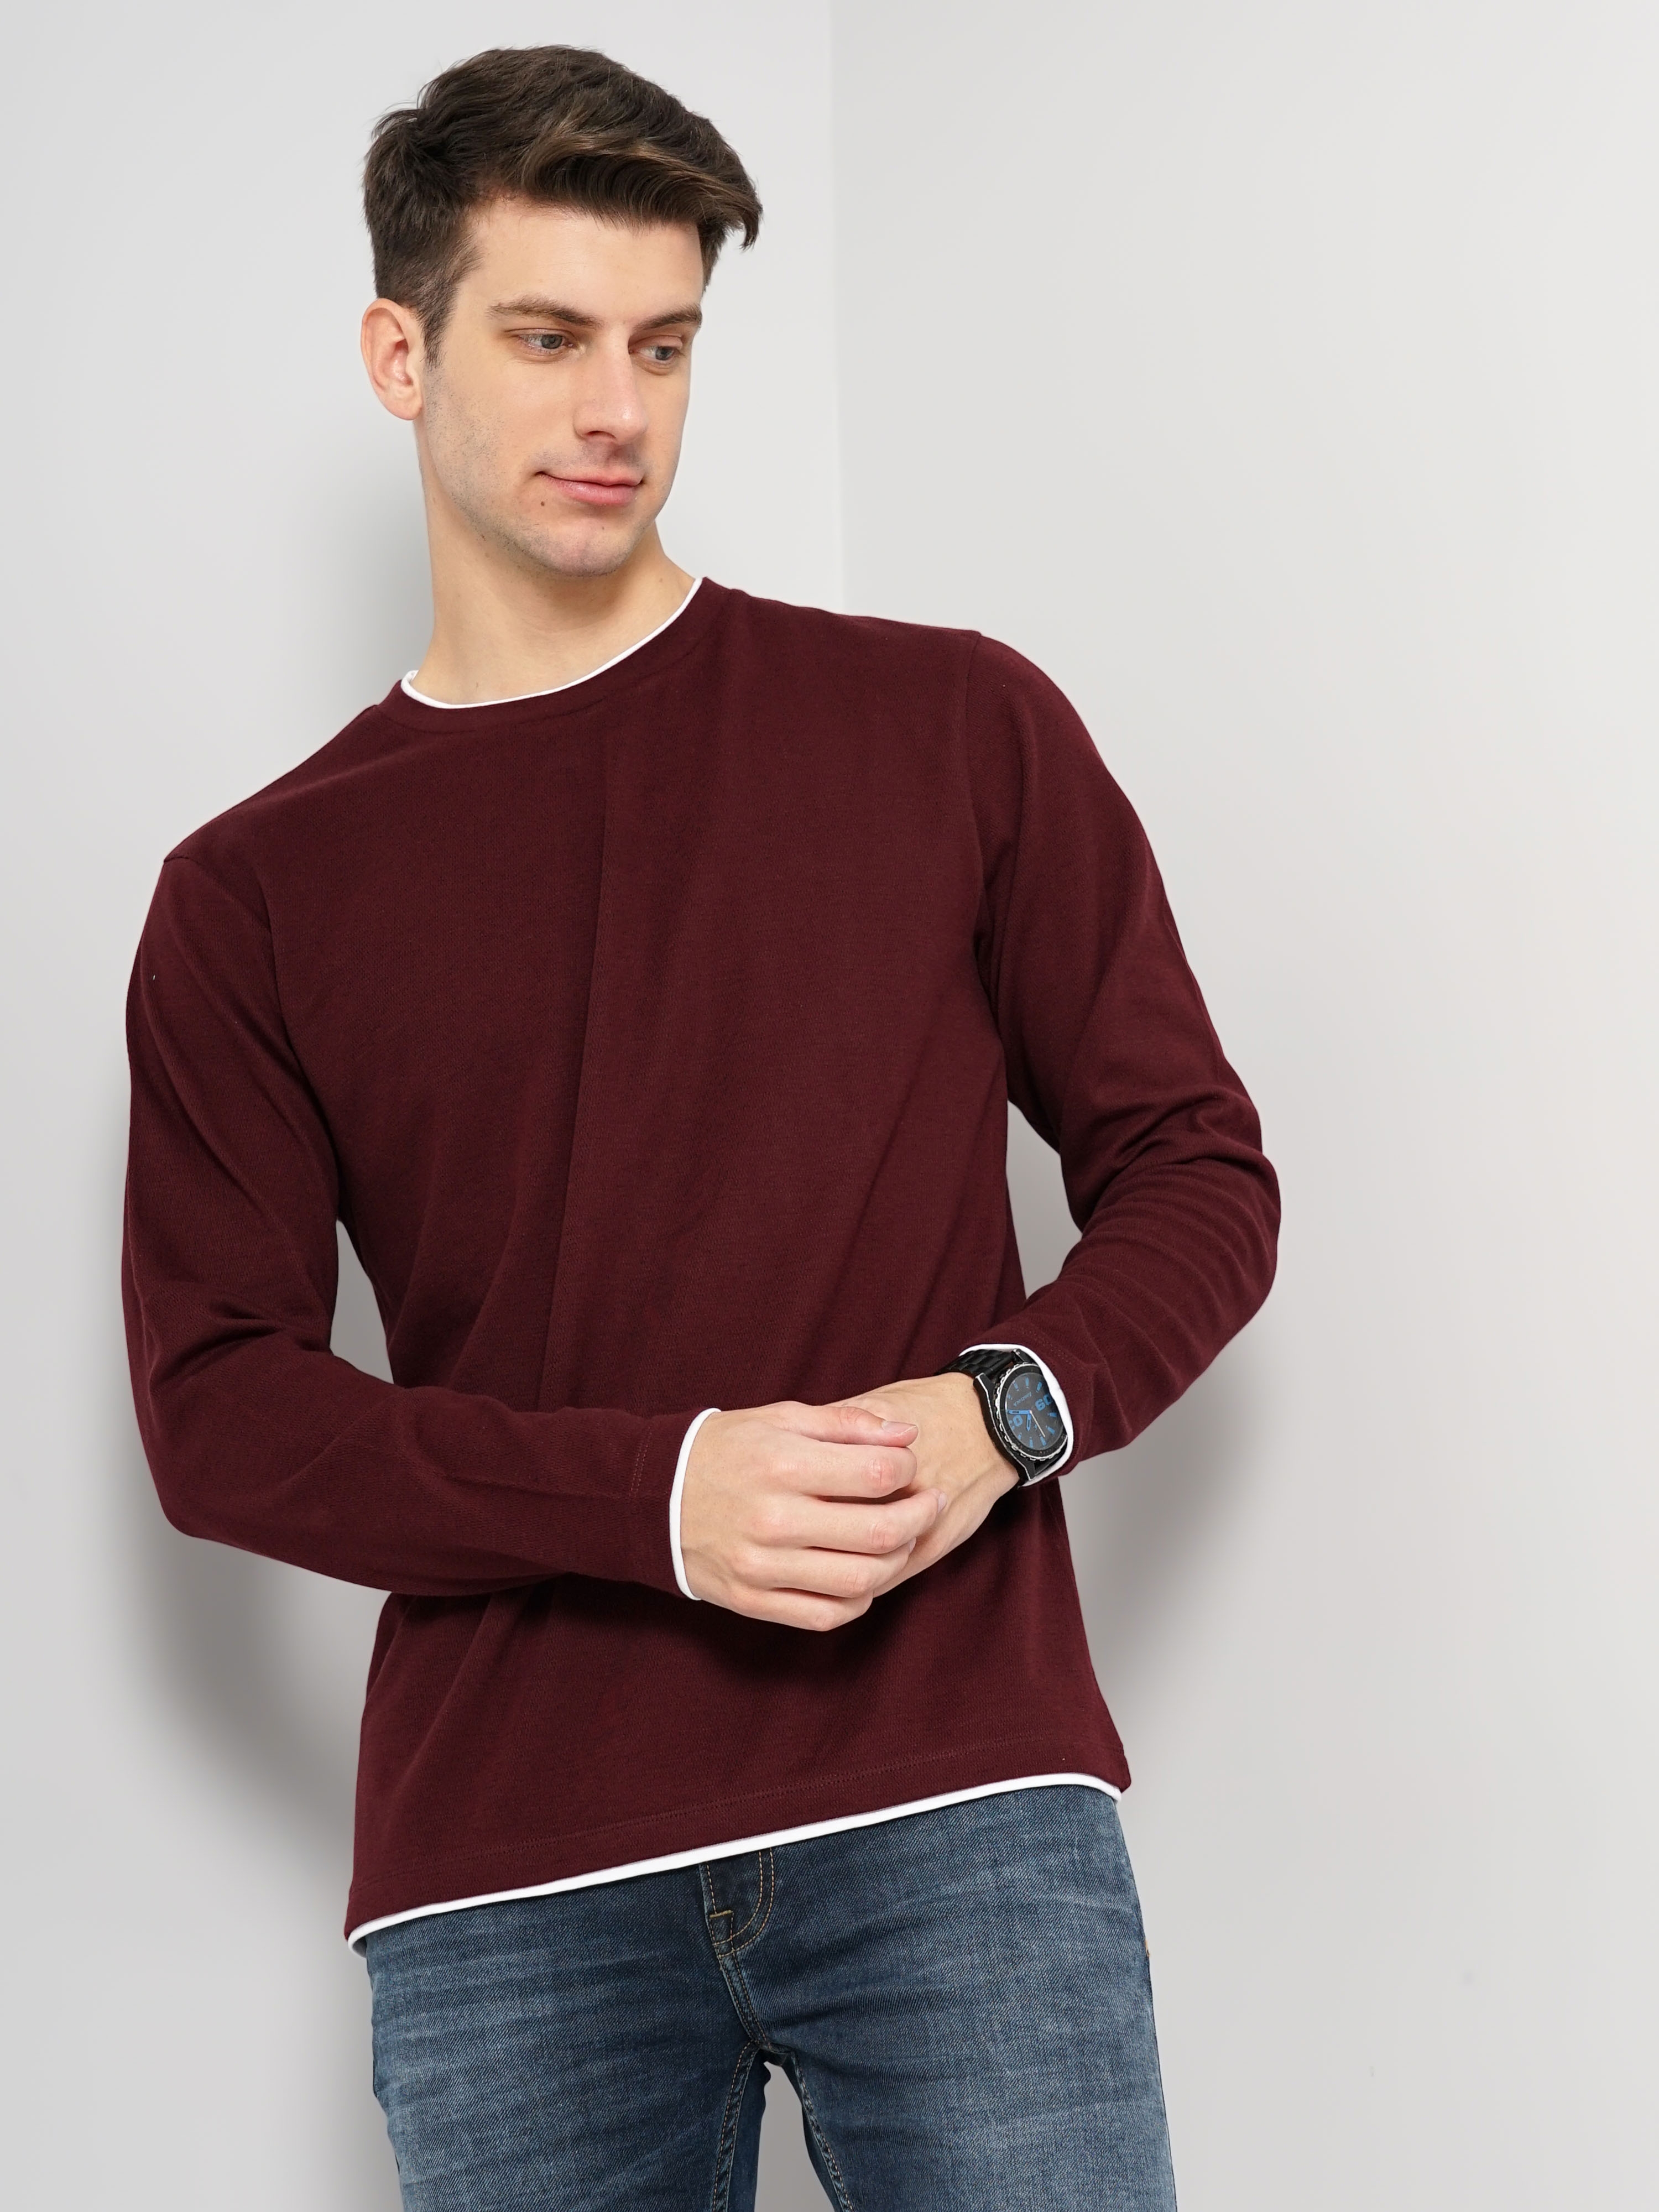 Men's Red Knitted Sweatshirts